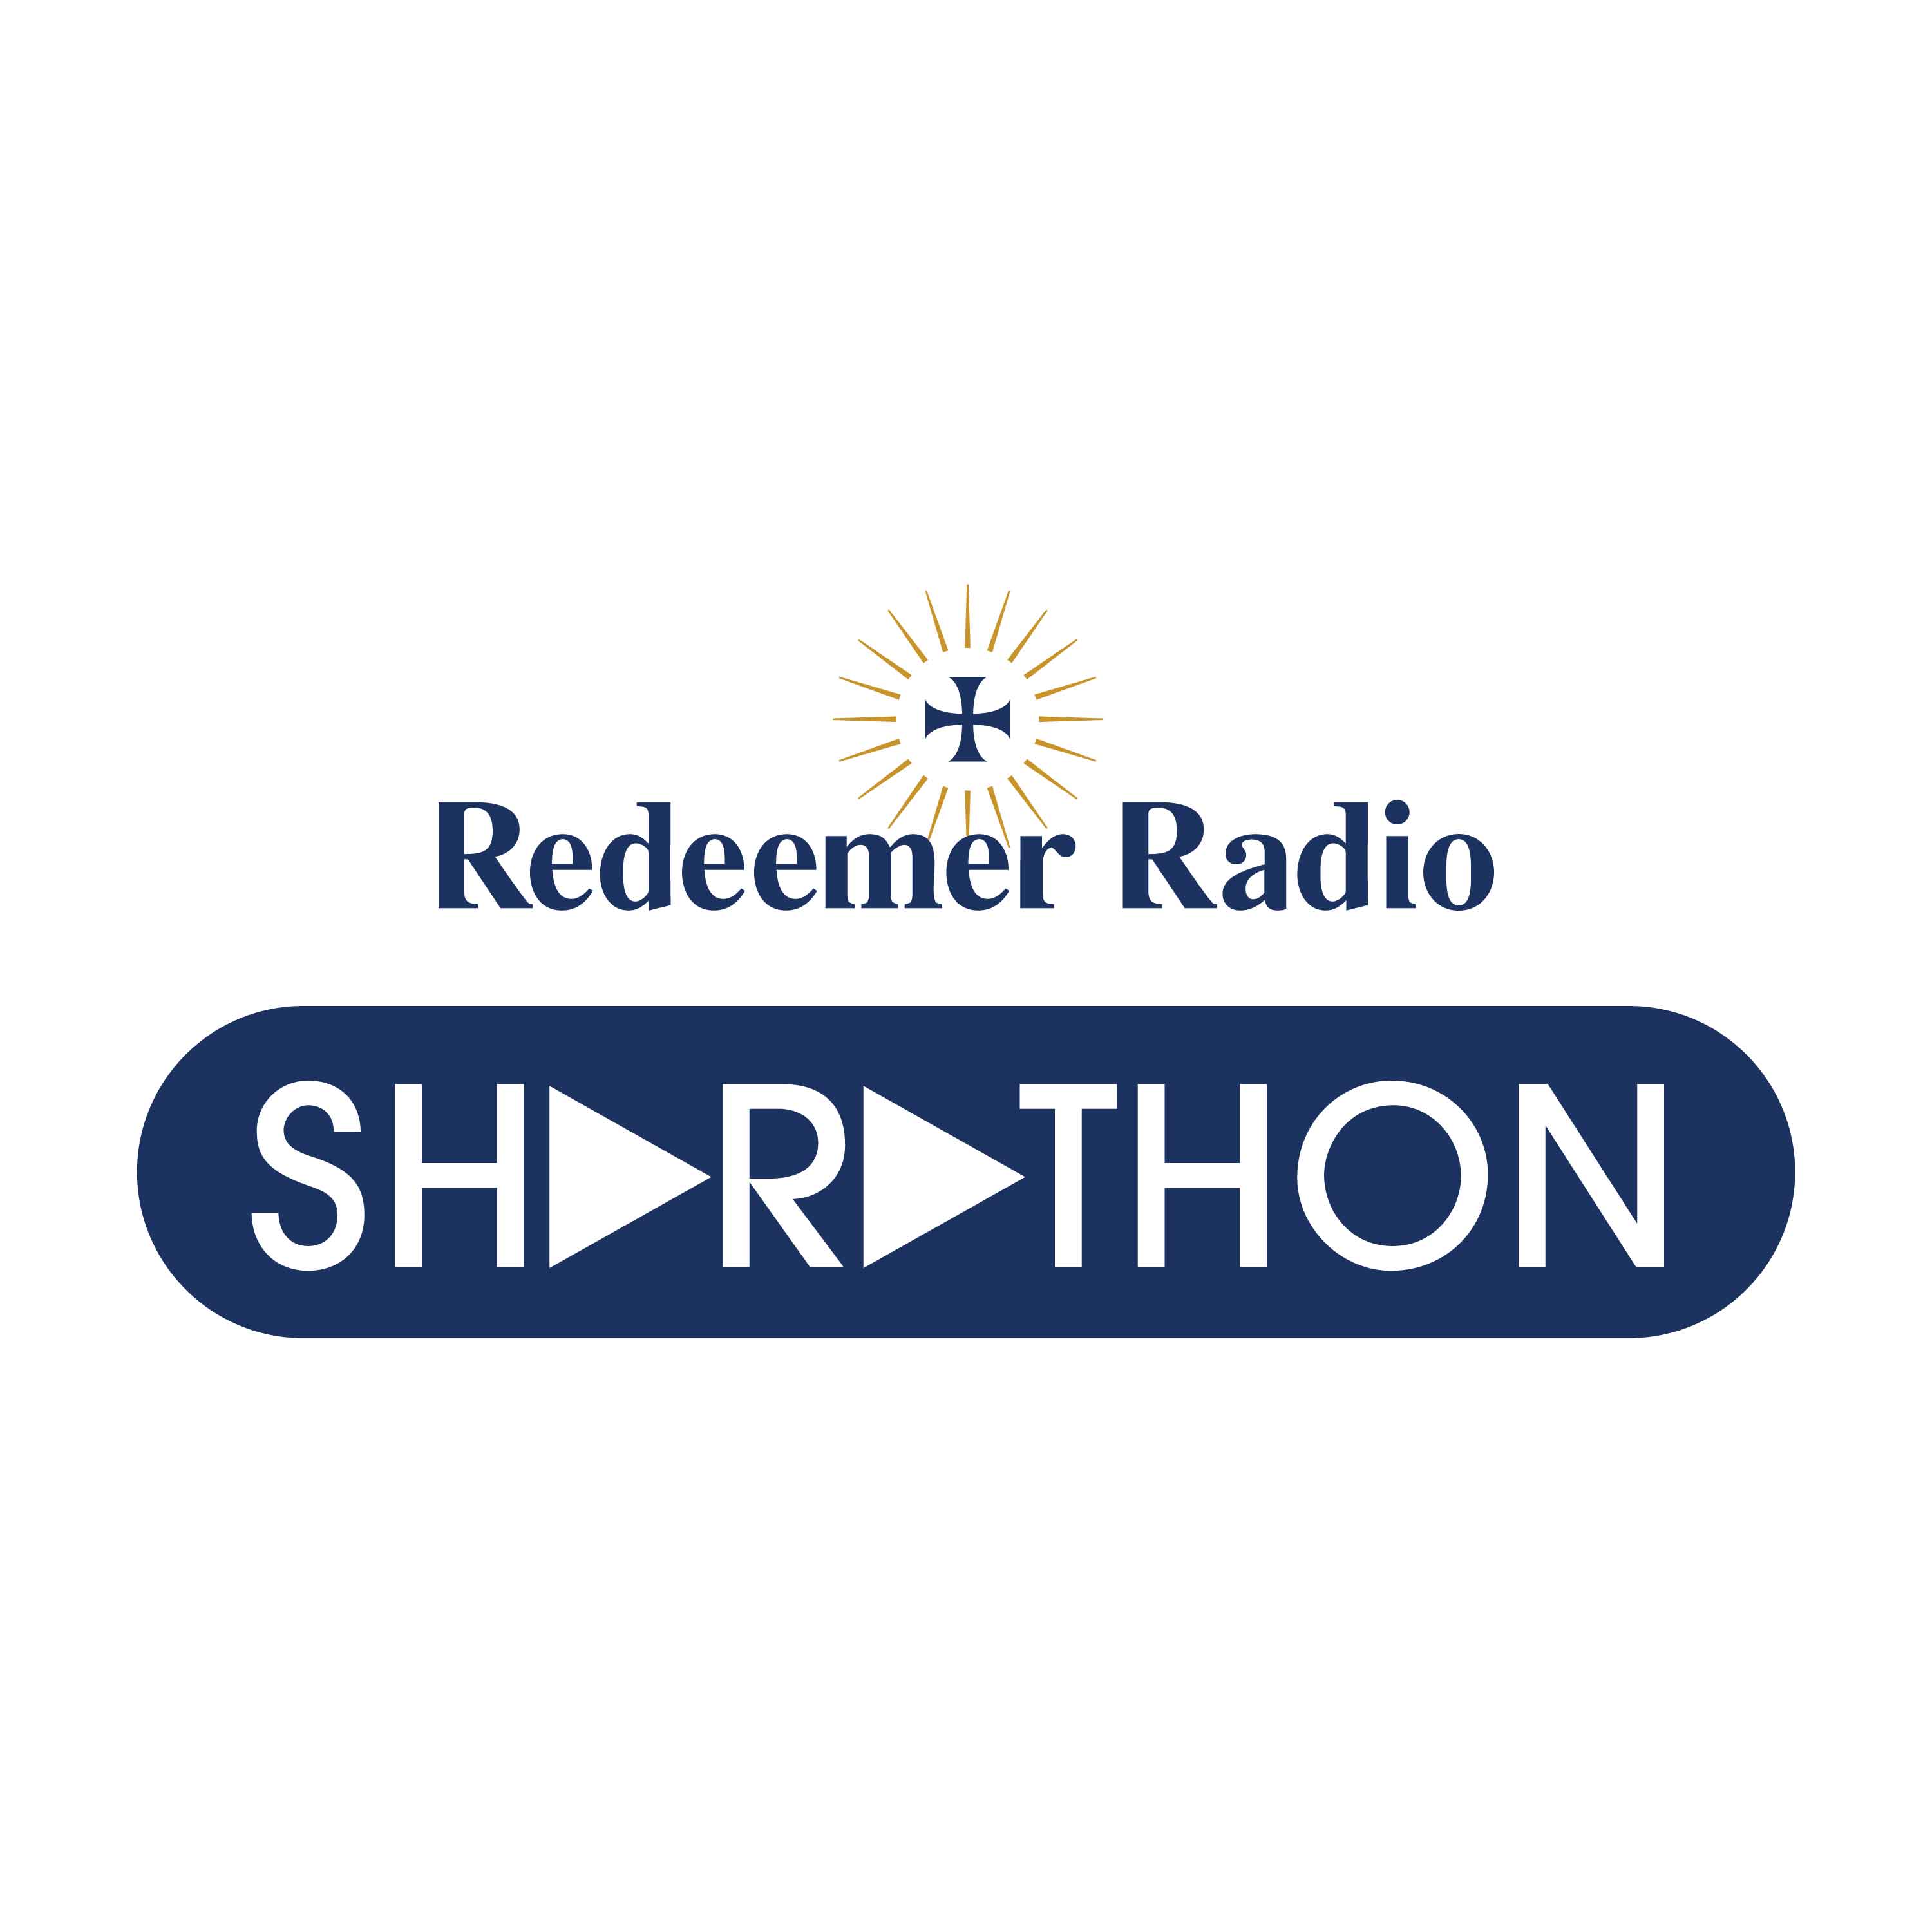 Artwork for podcast Redeemer Radio - Sharathon